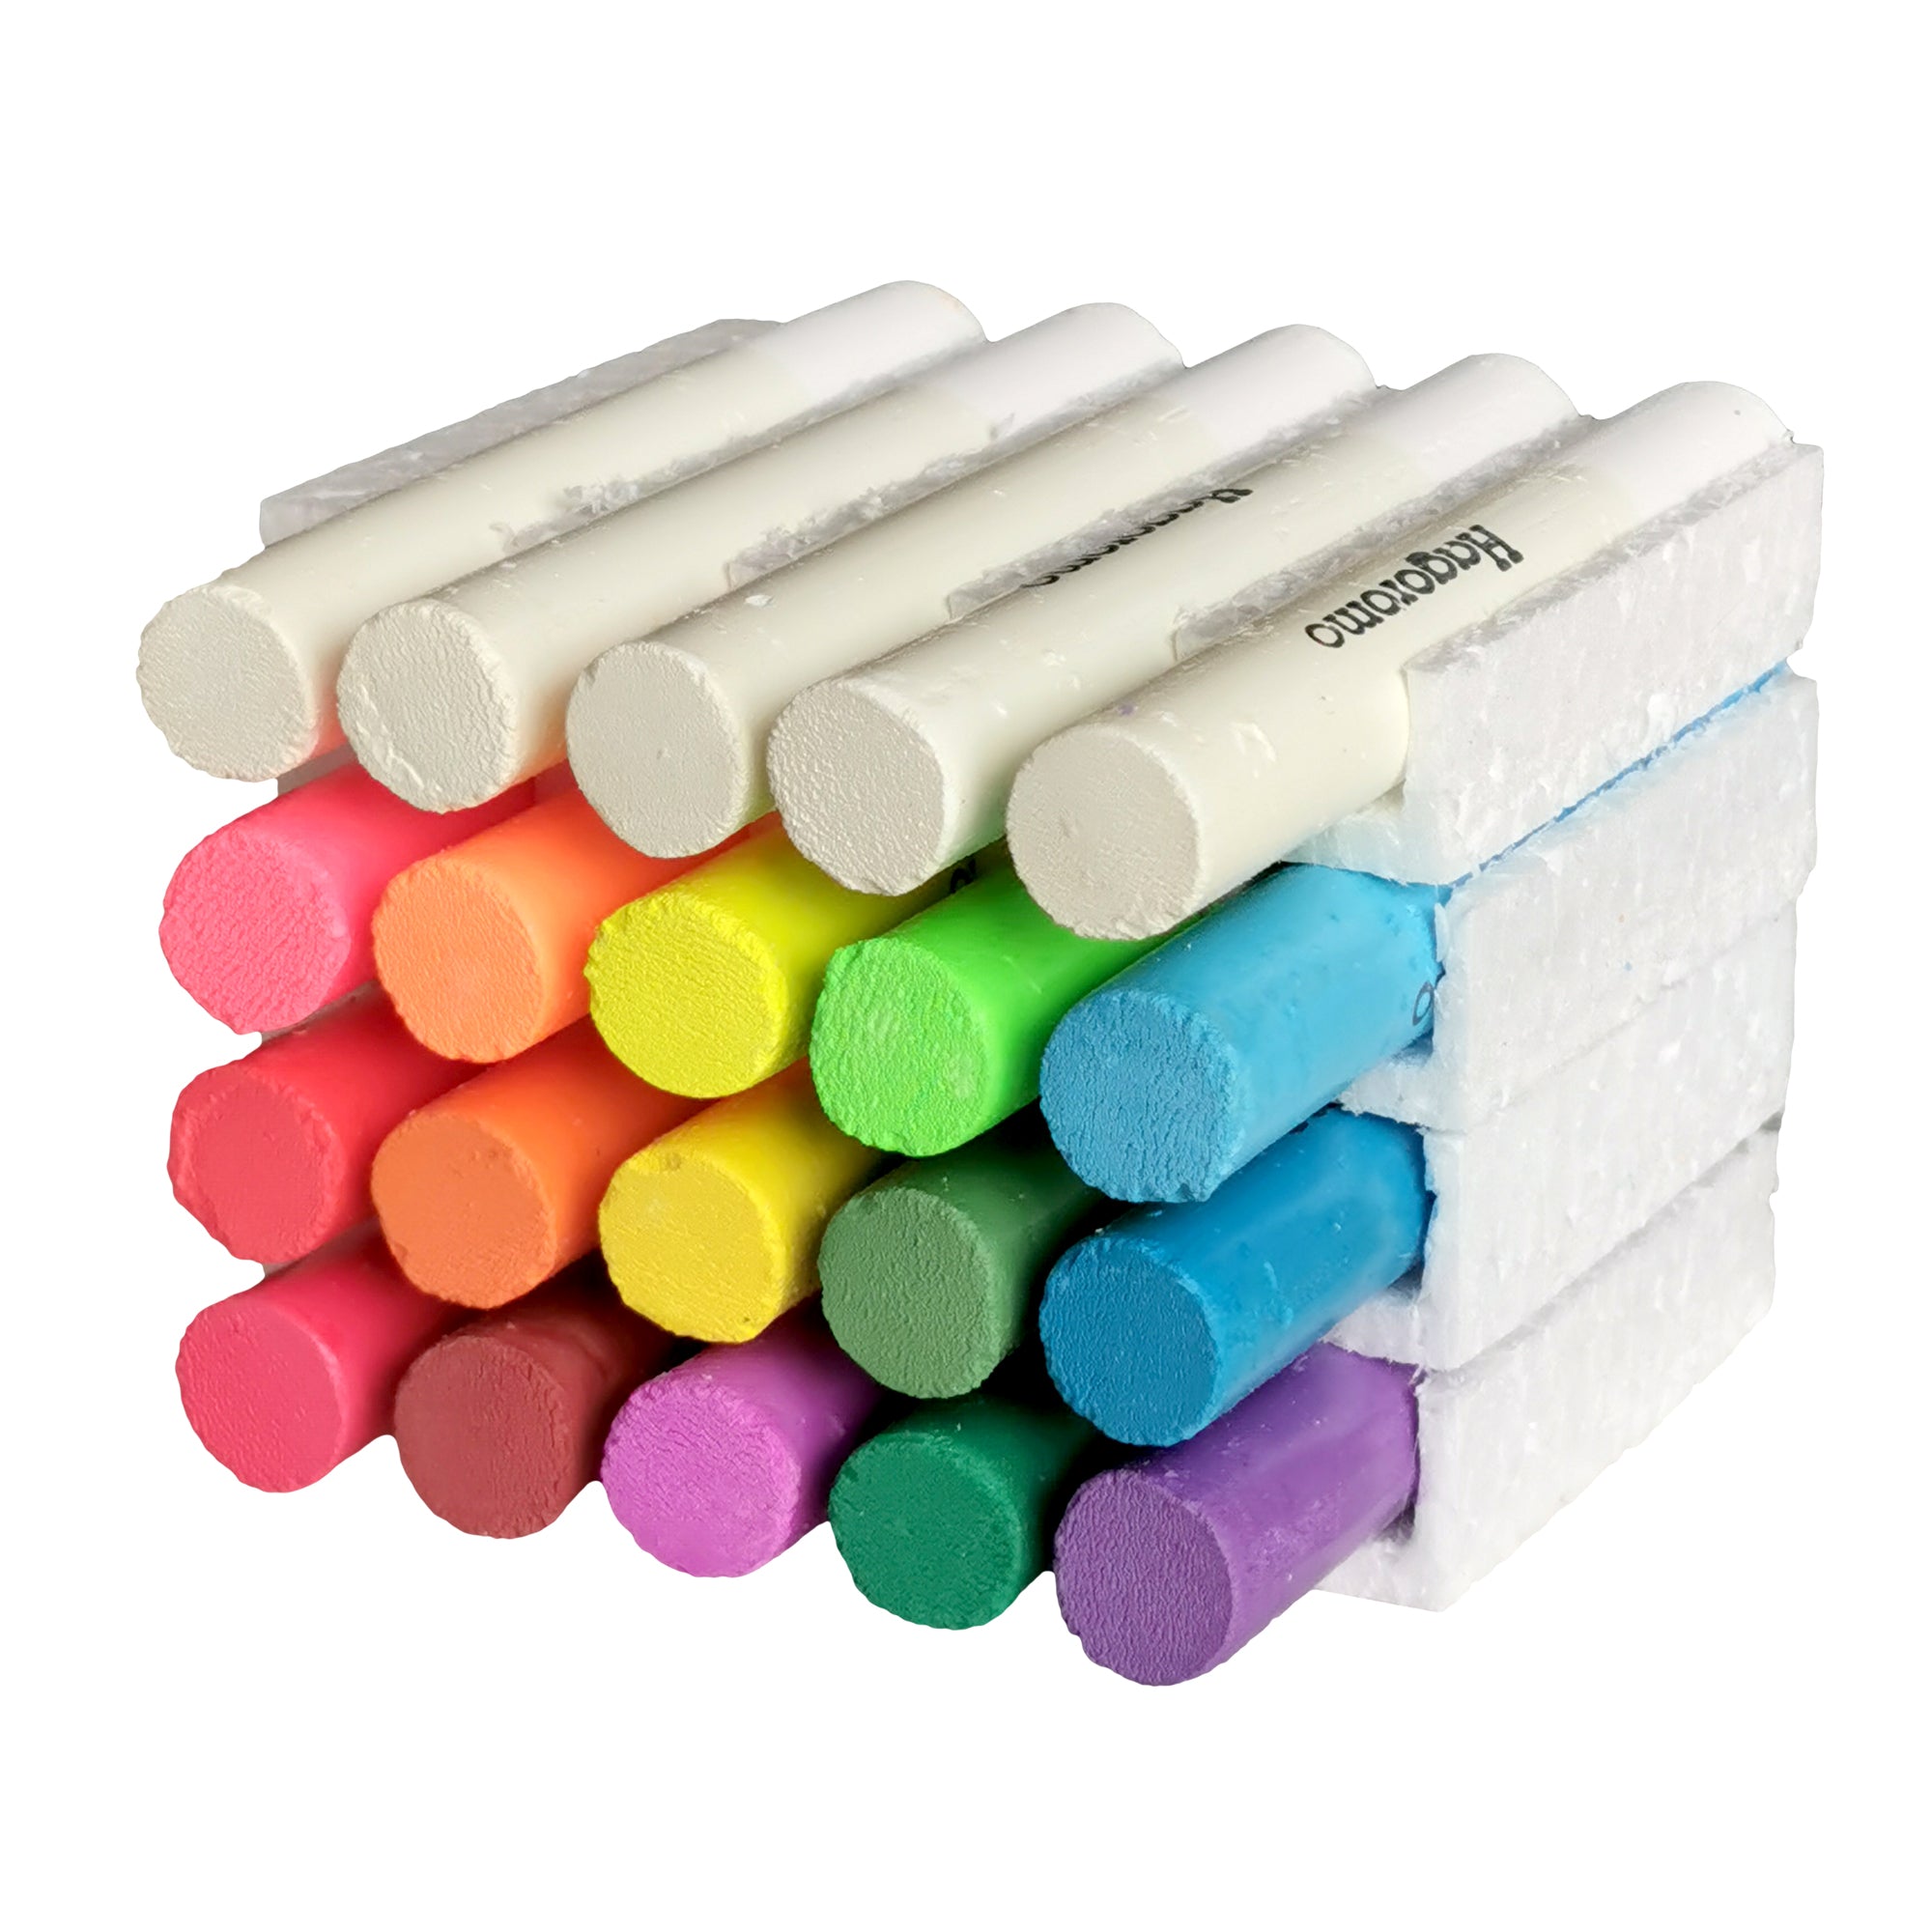 HAGOROMO Fulltouch 5Colors Luminous Chalk 1 Box [5 Pcs / 5 color